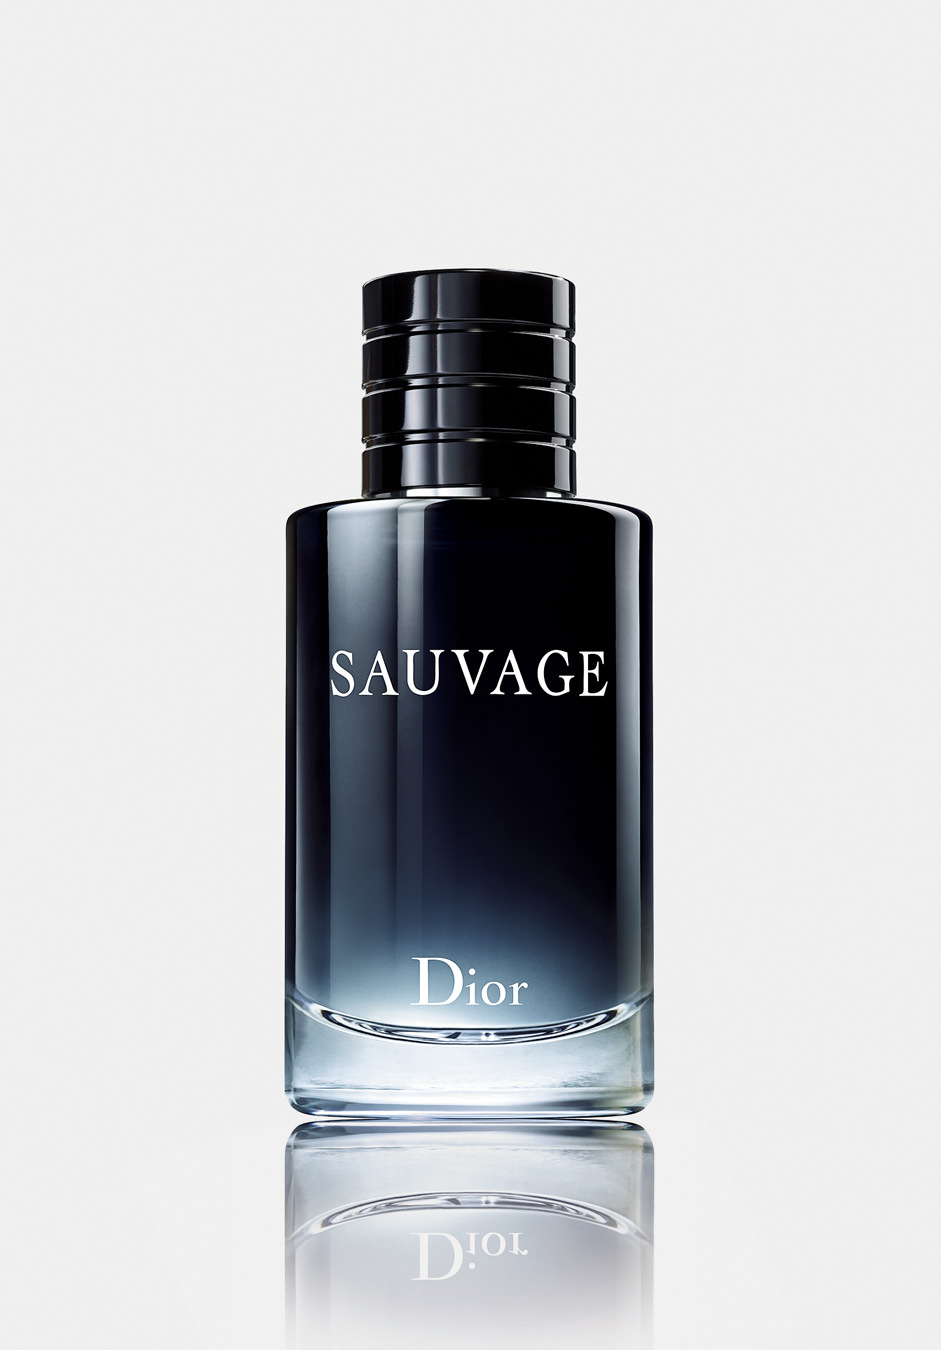 Sauvage by Dior | MONTECRISTO